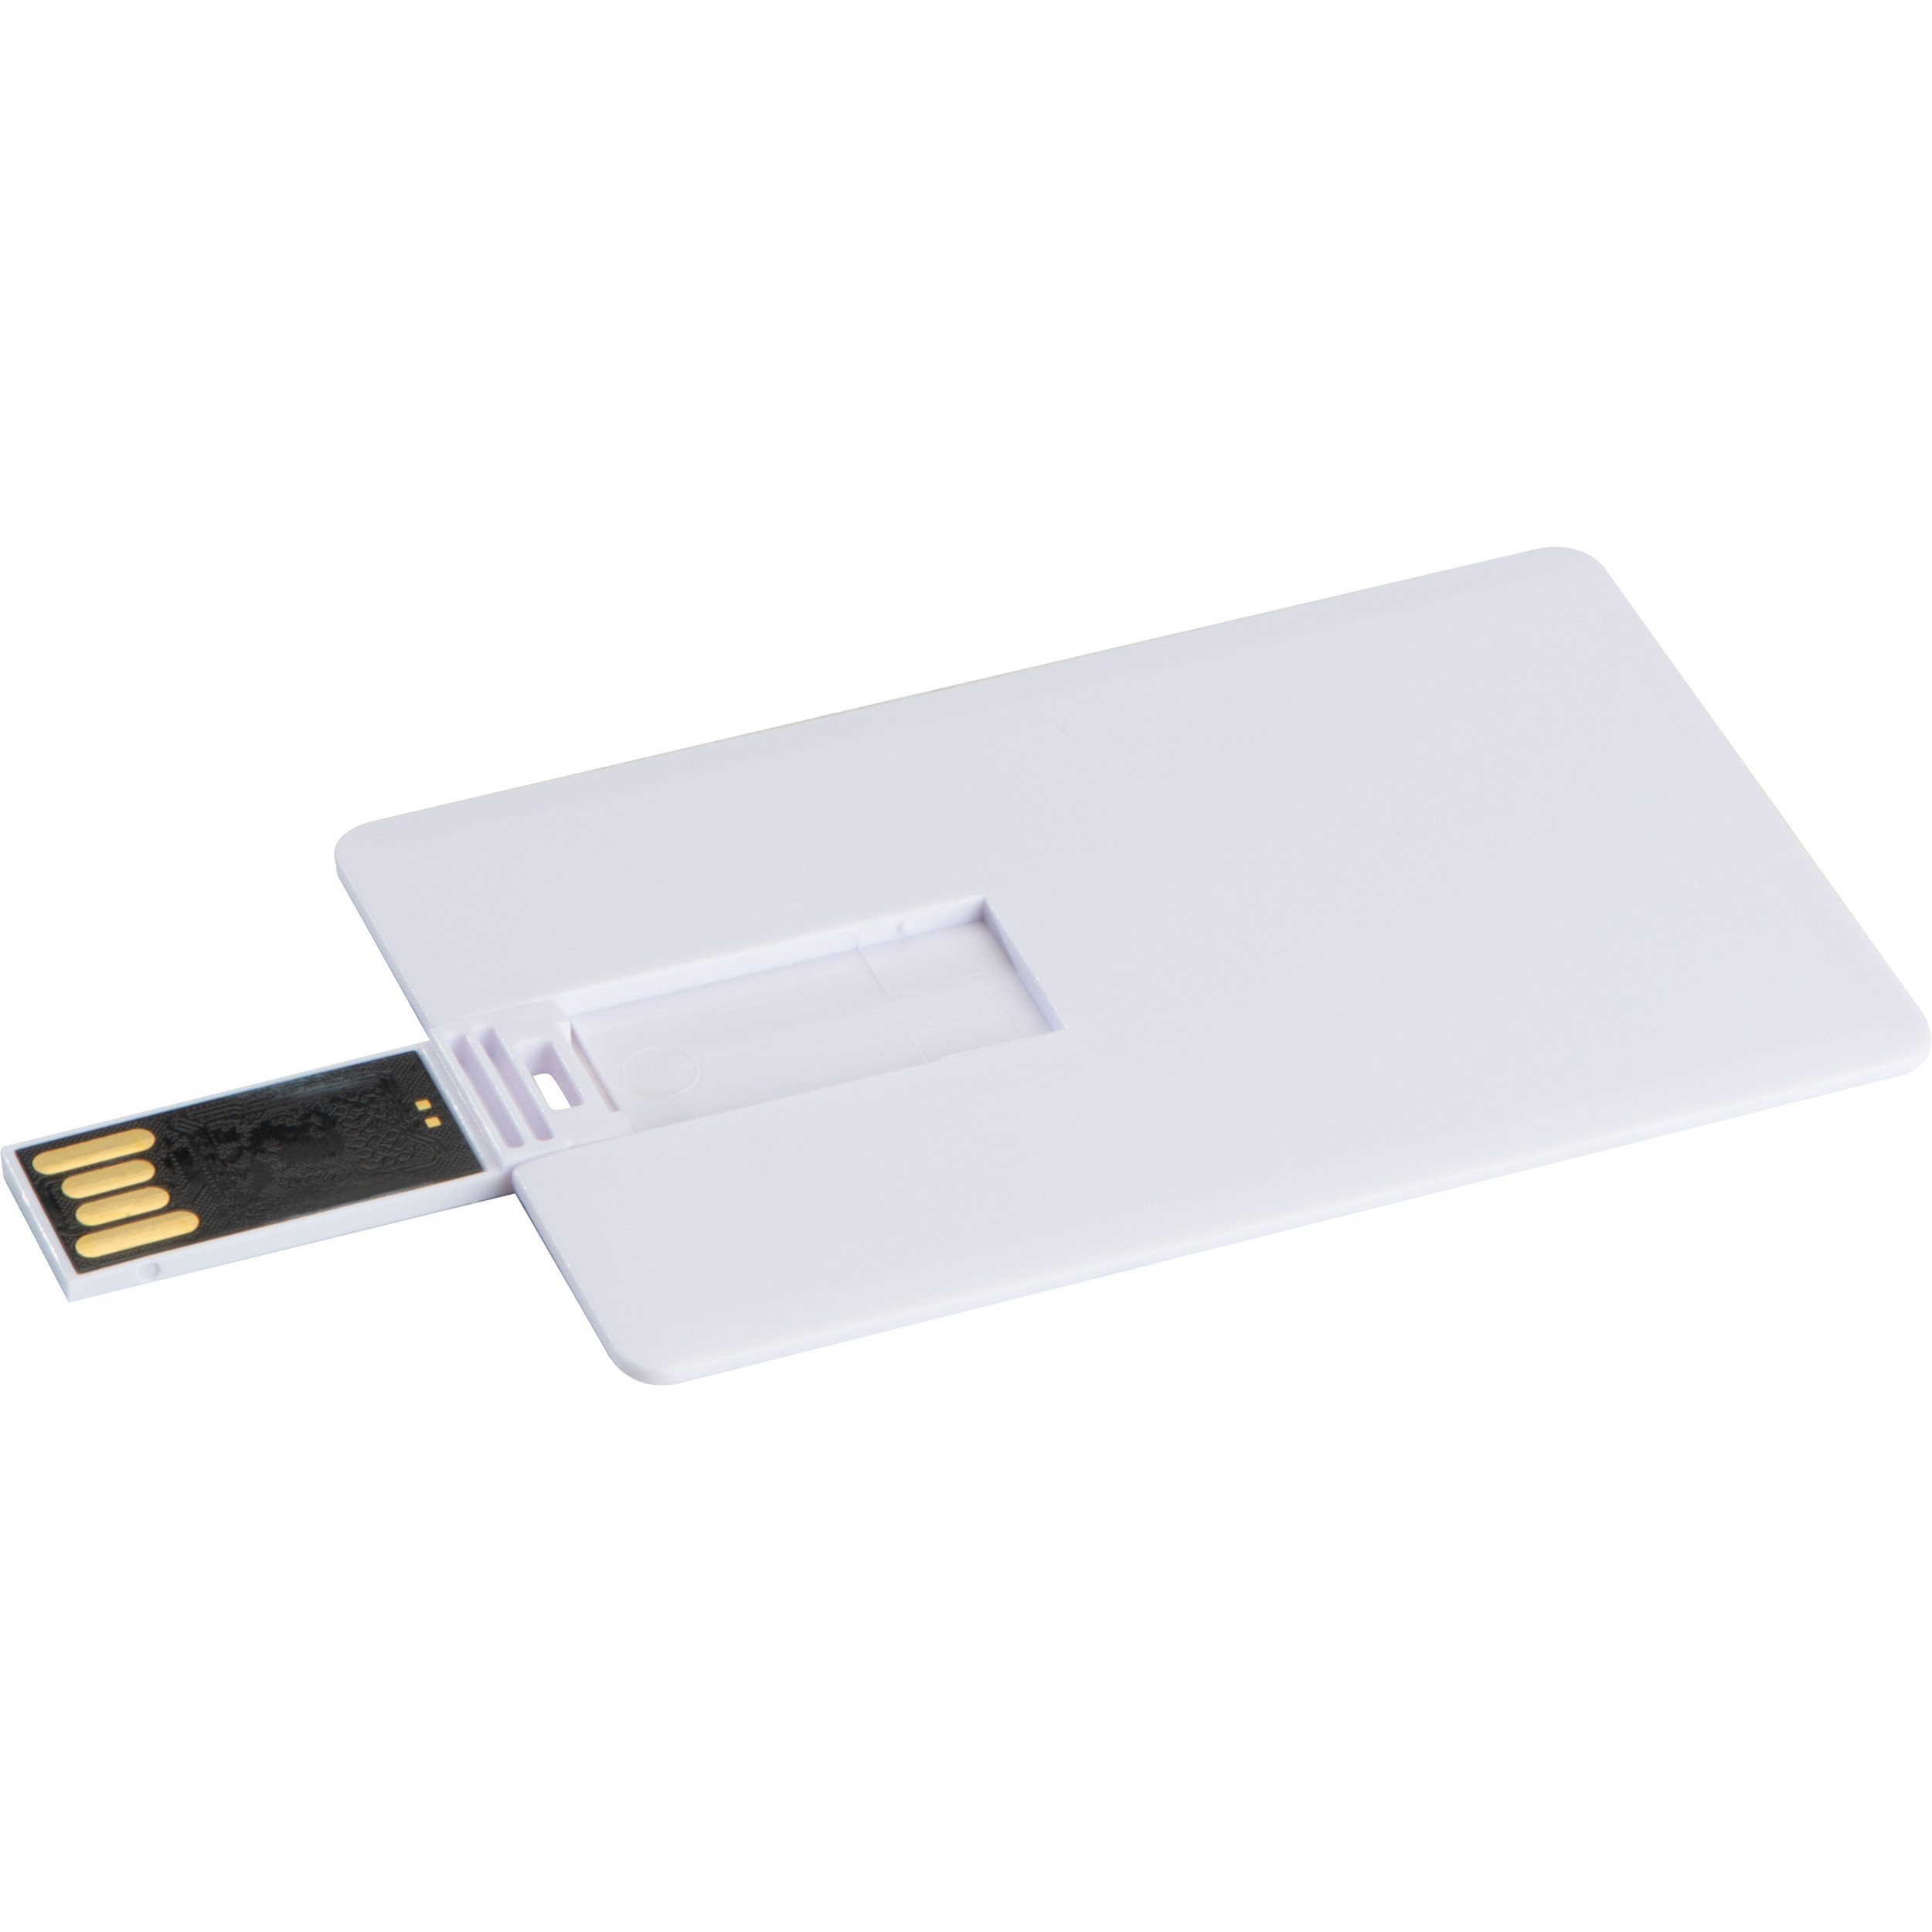 USB Karte 8GB